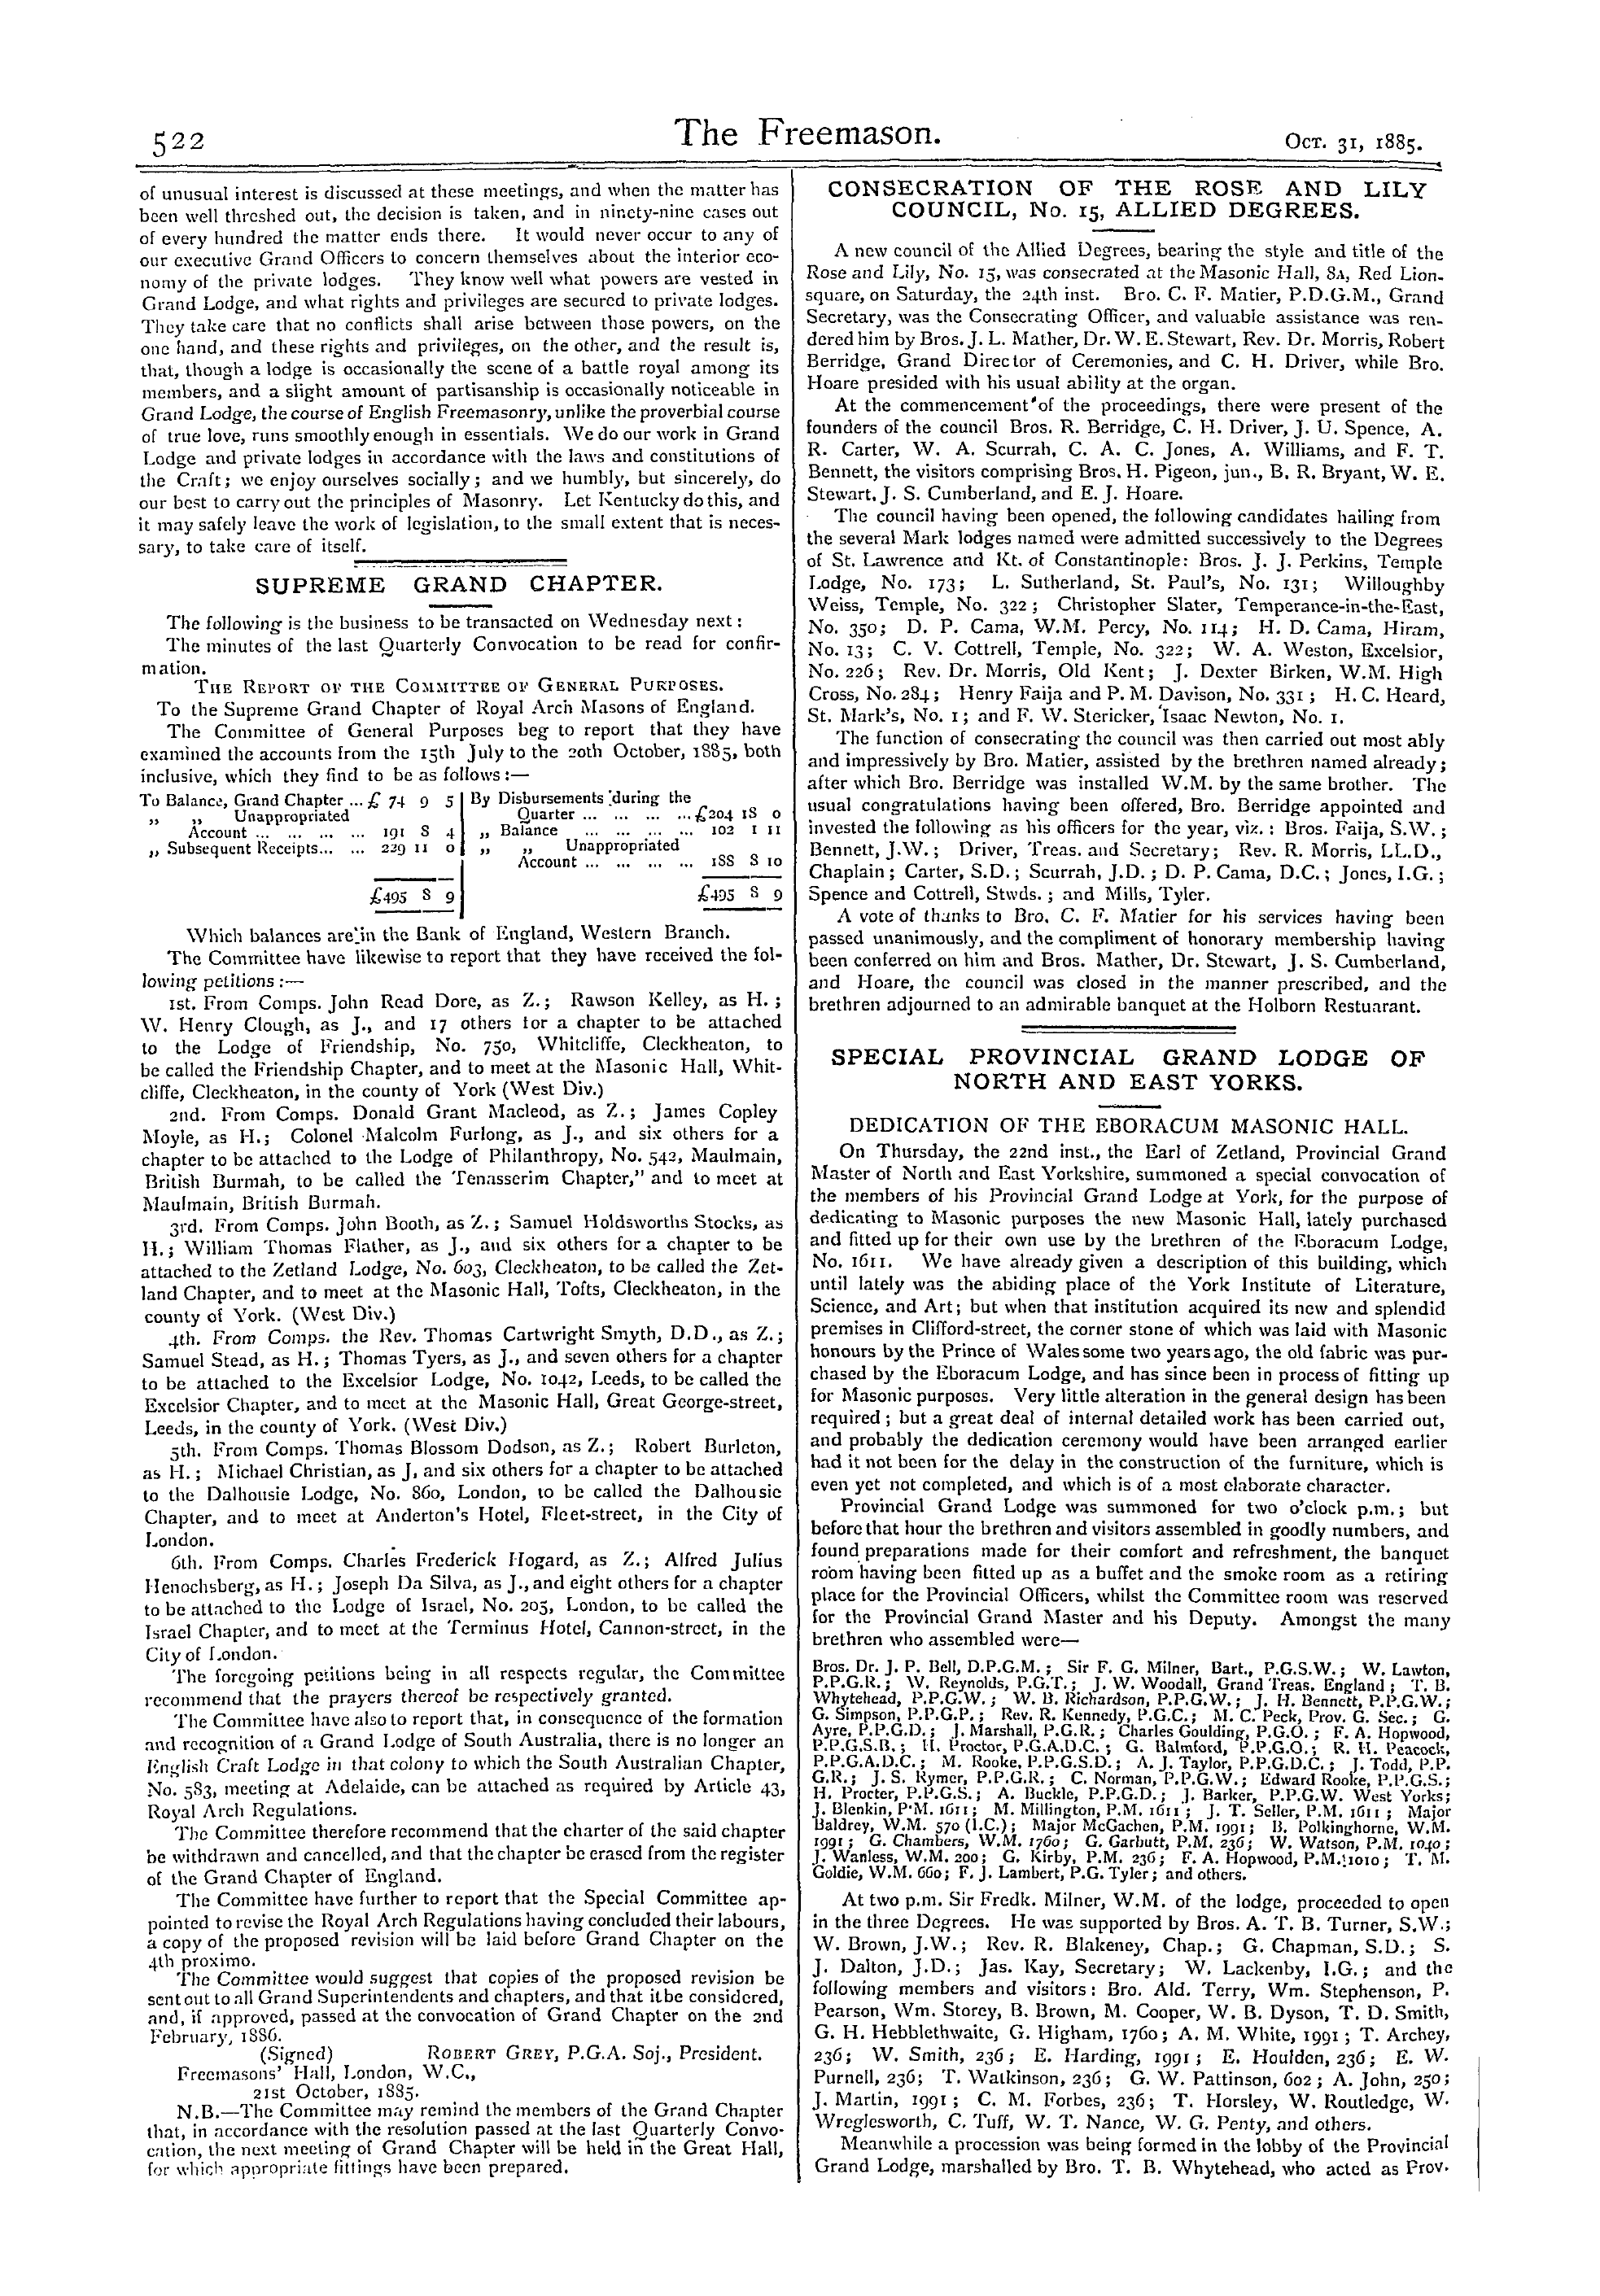 The Freemason: 1885-10-31: 2